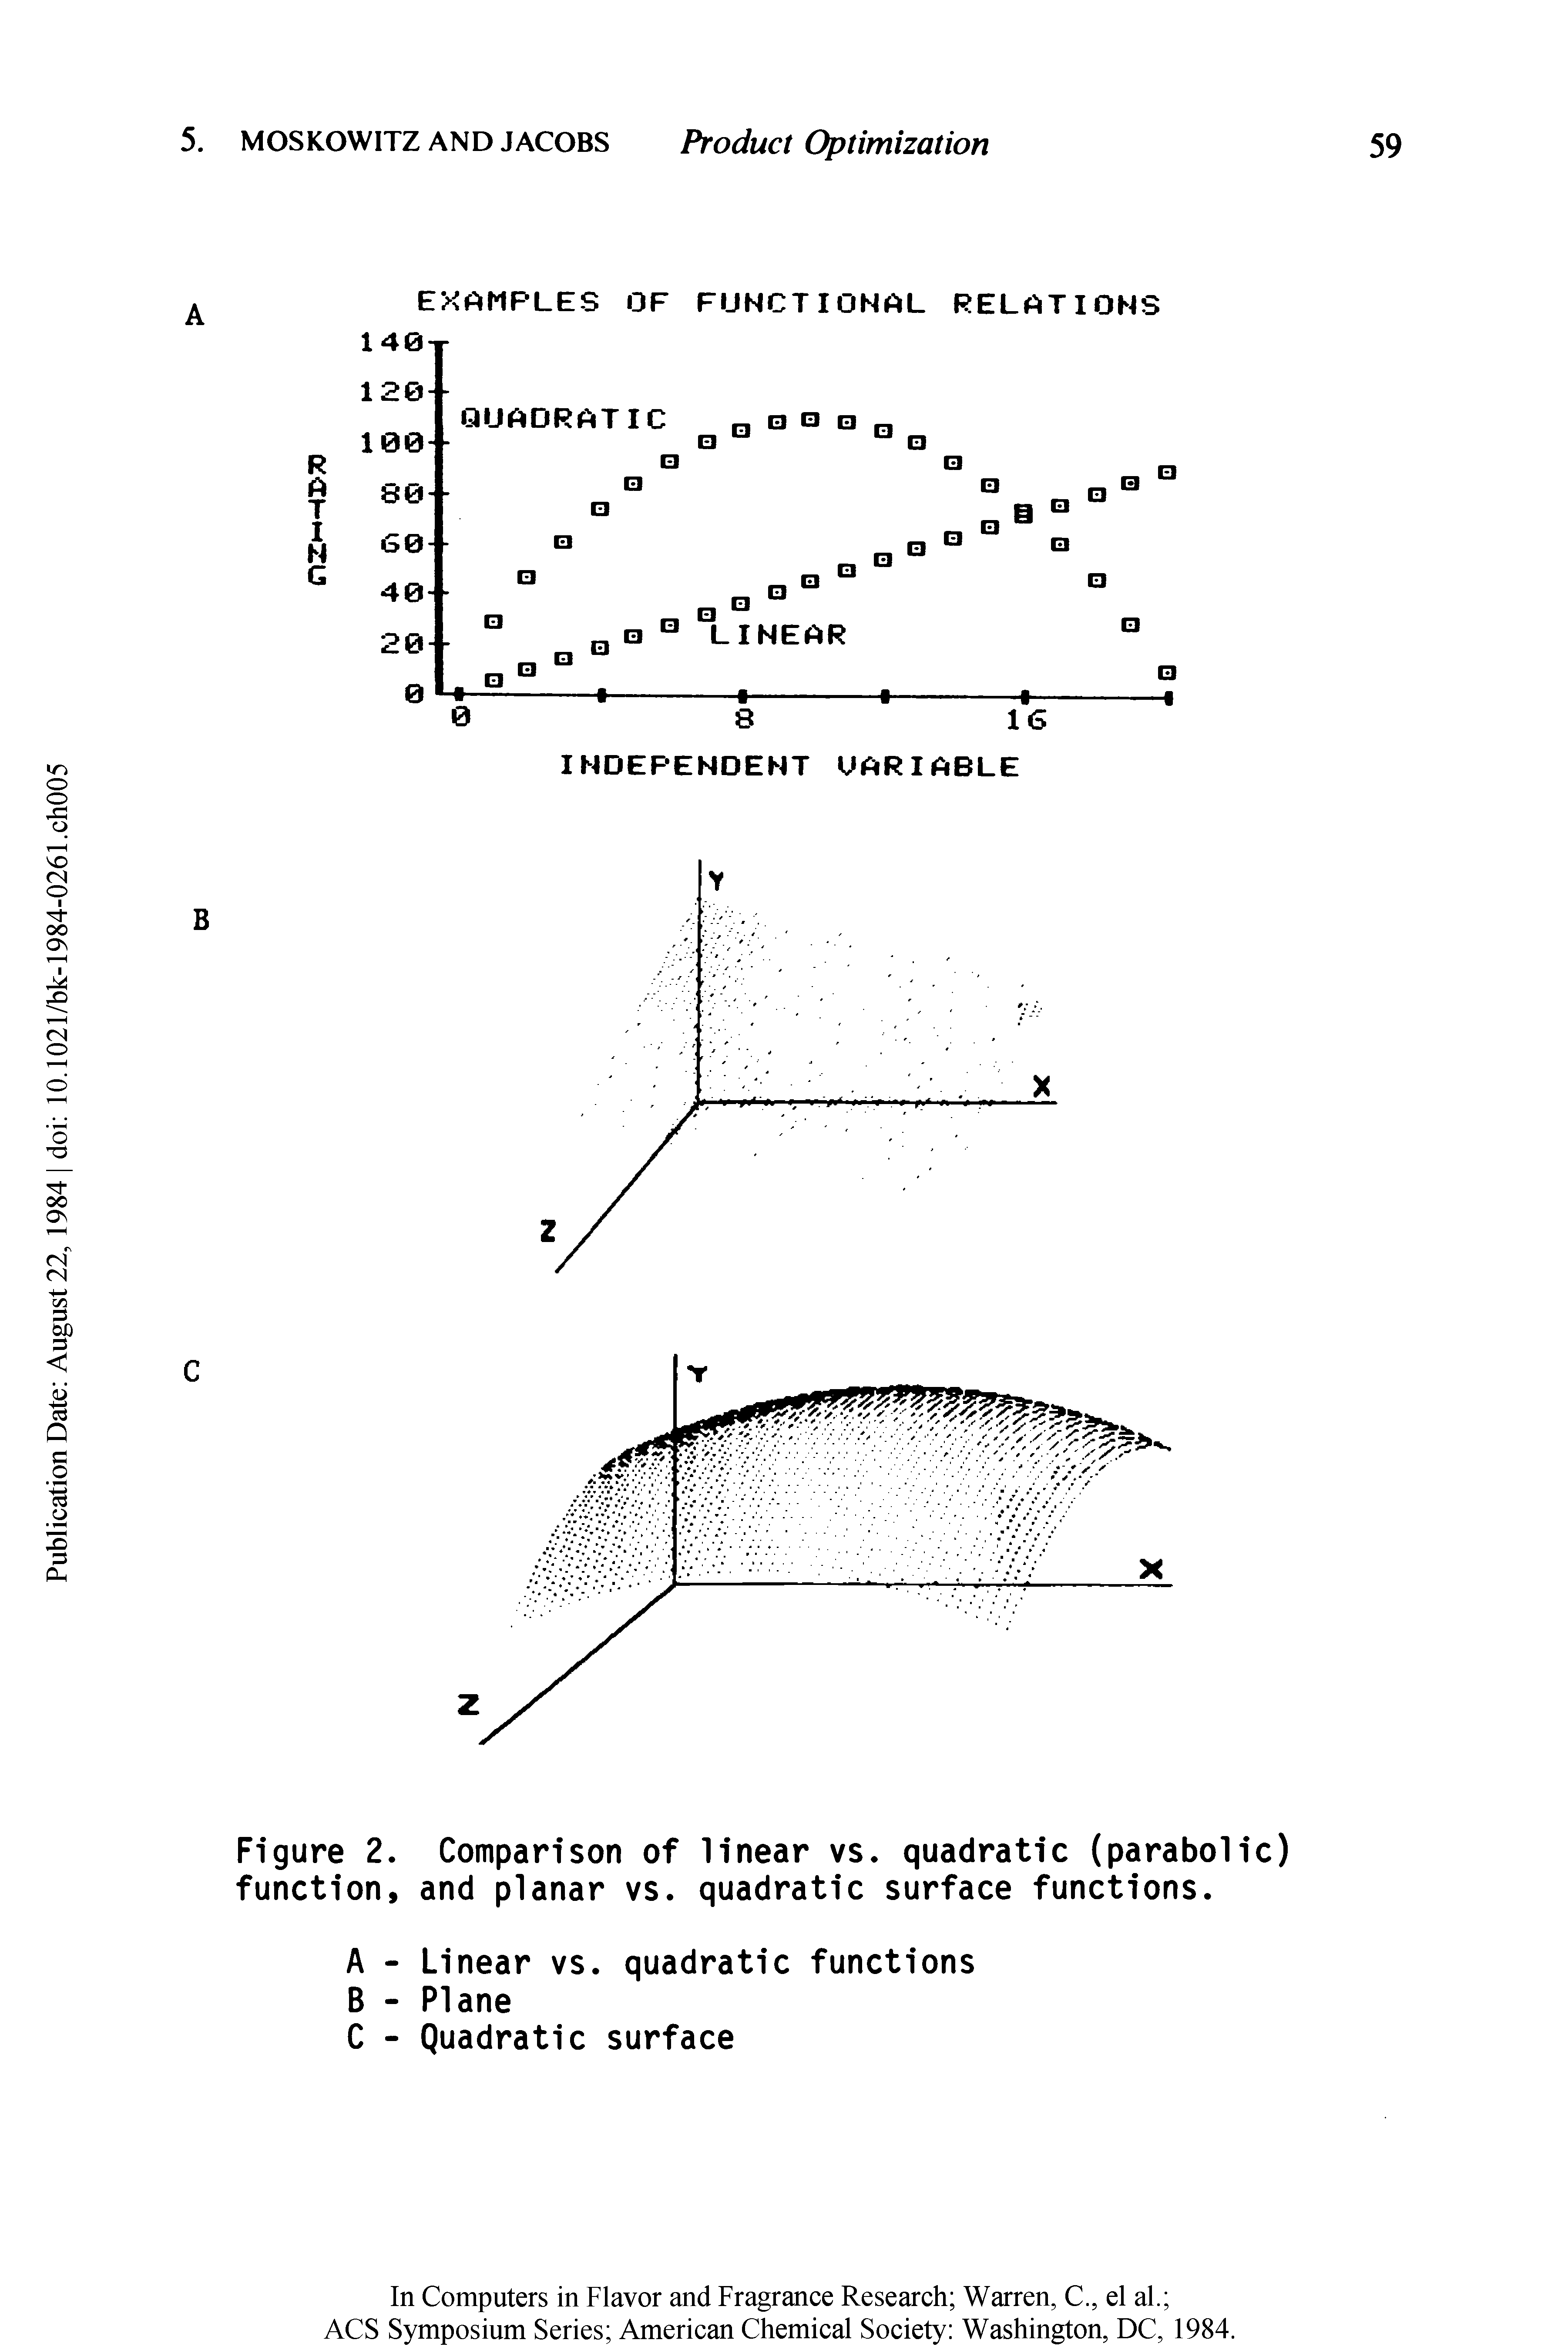 Figure 2. Comparison of linear vs. quadratic (parabolic) function, and planar vs. quadratic surface functions.